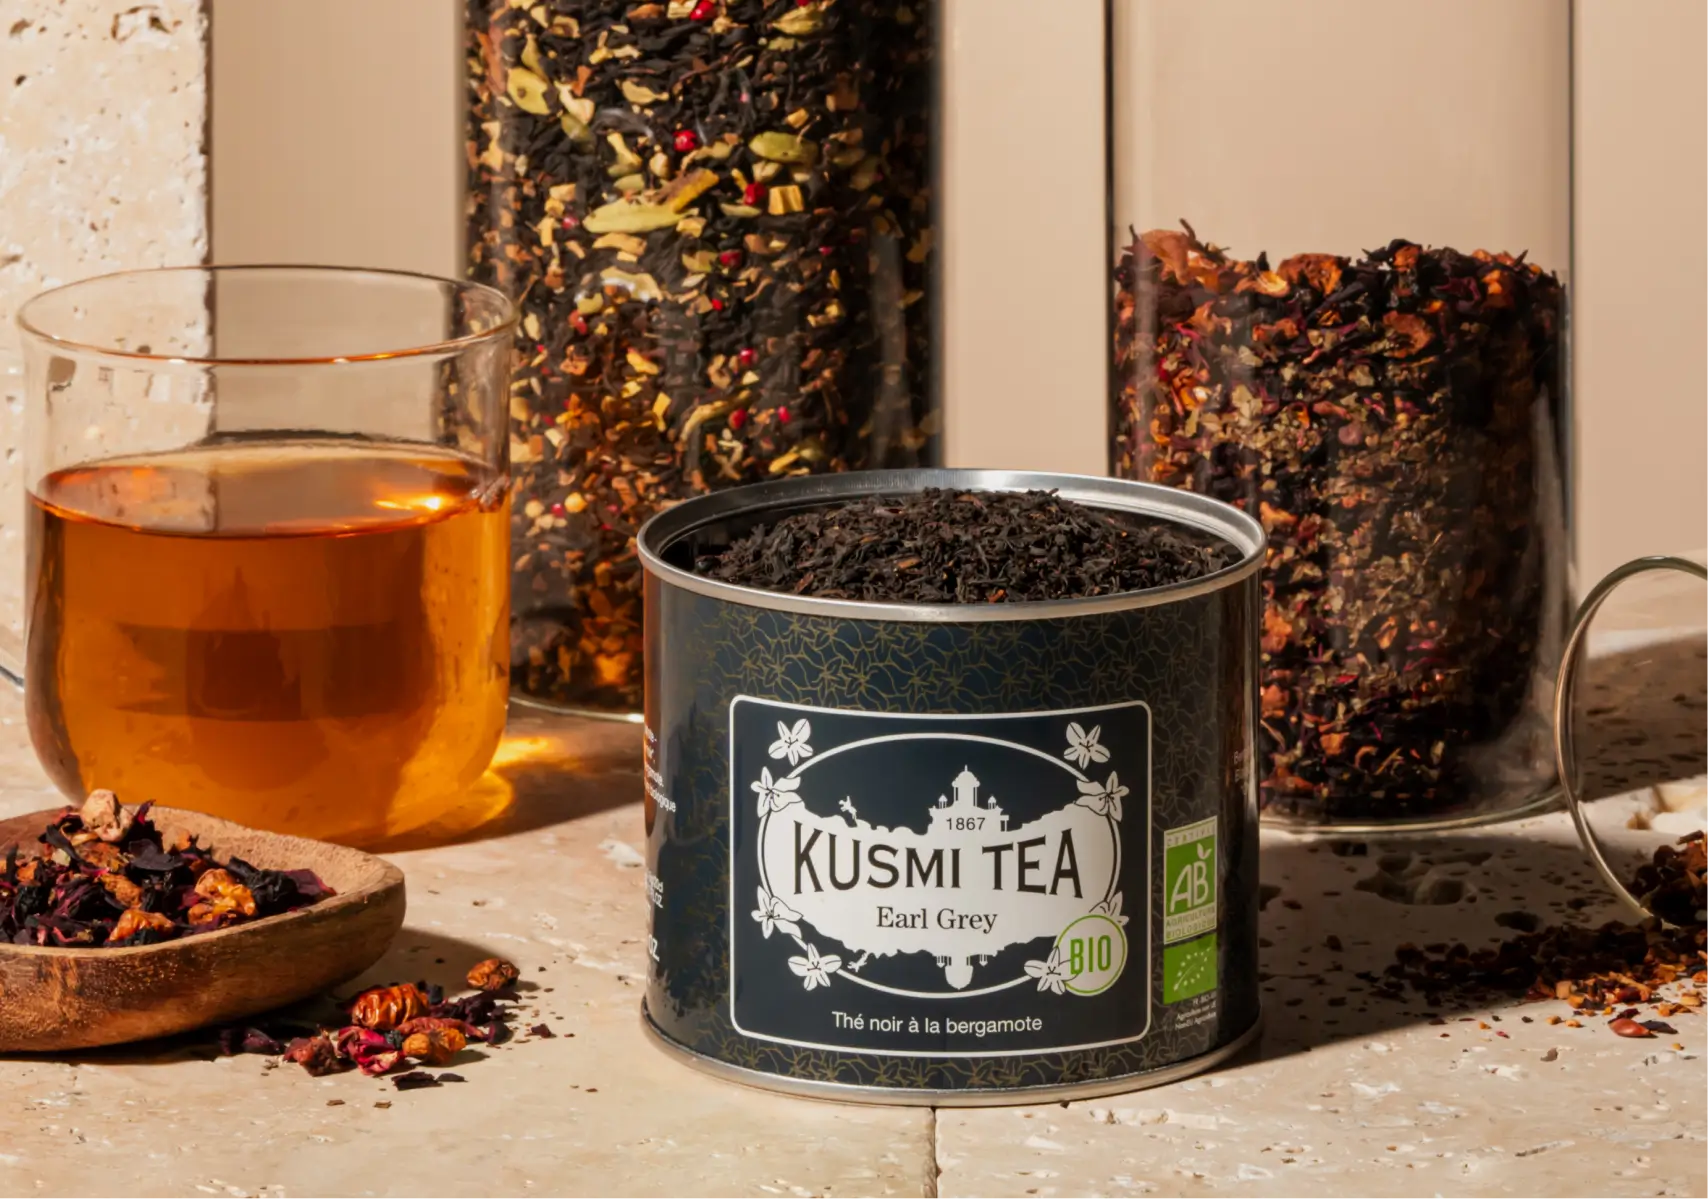 Earl Grey product Kusmi Tea